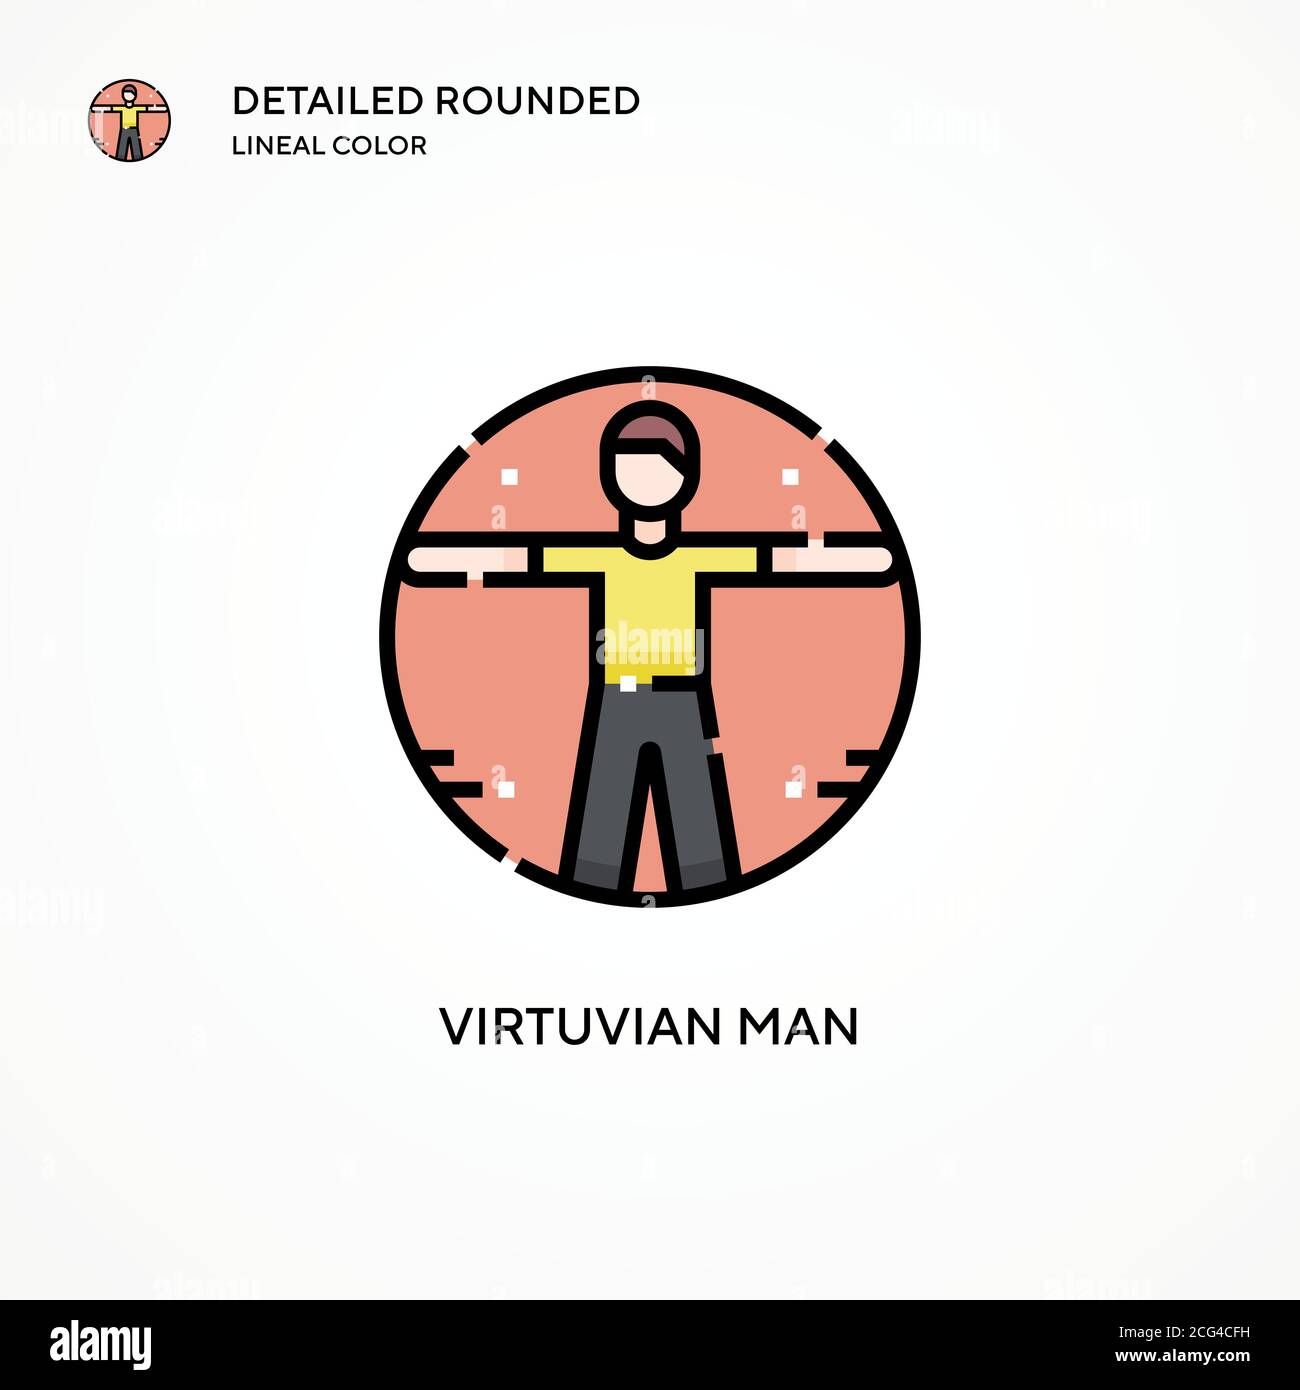 Virtuvian man vector icon. Modern vector illustration concepts. Easy to edit and customize. Stock Vector